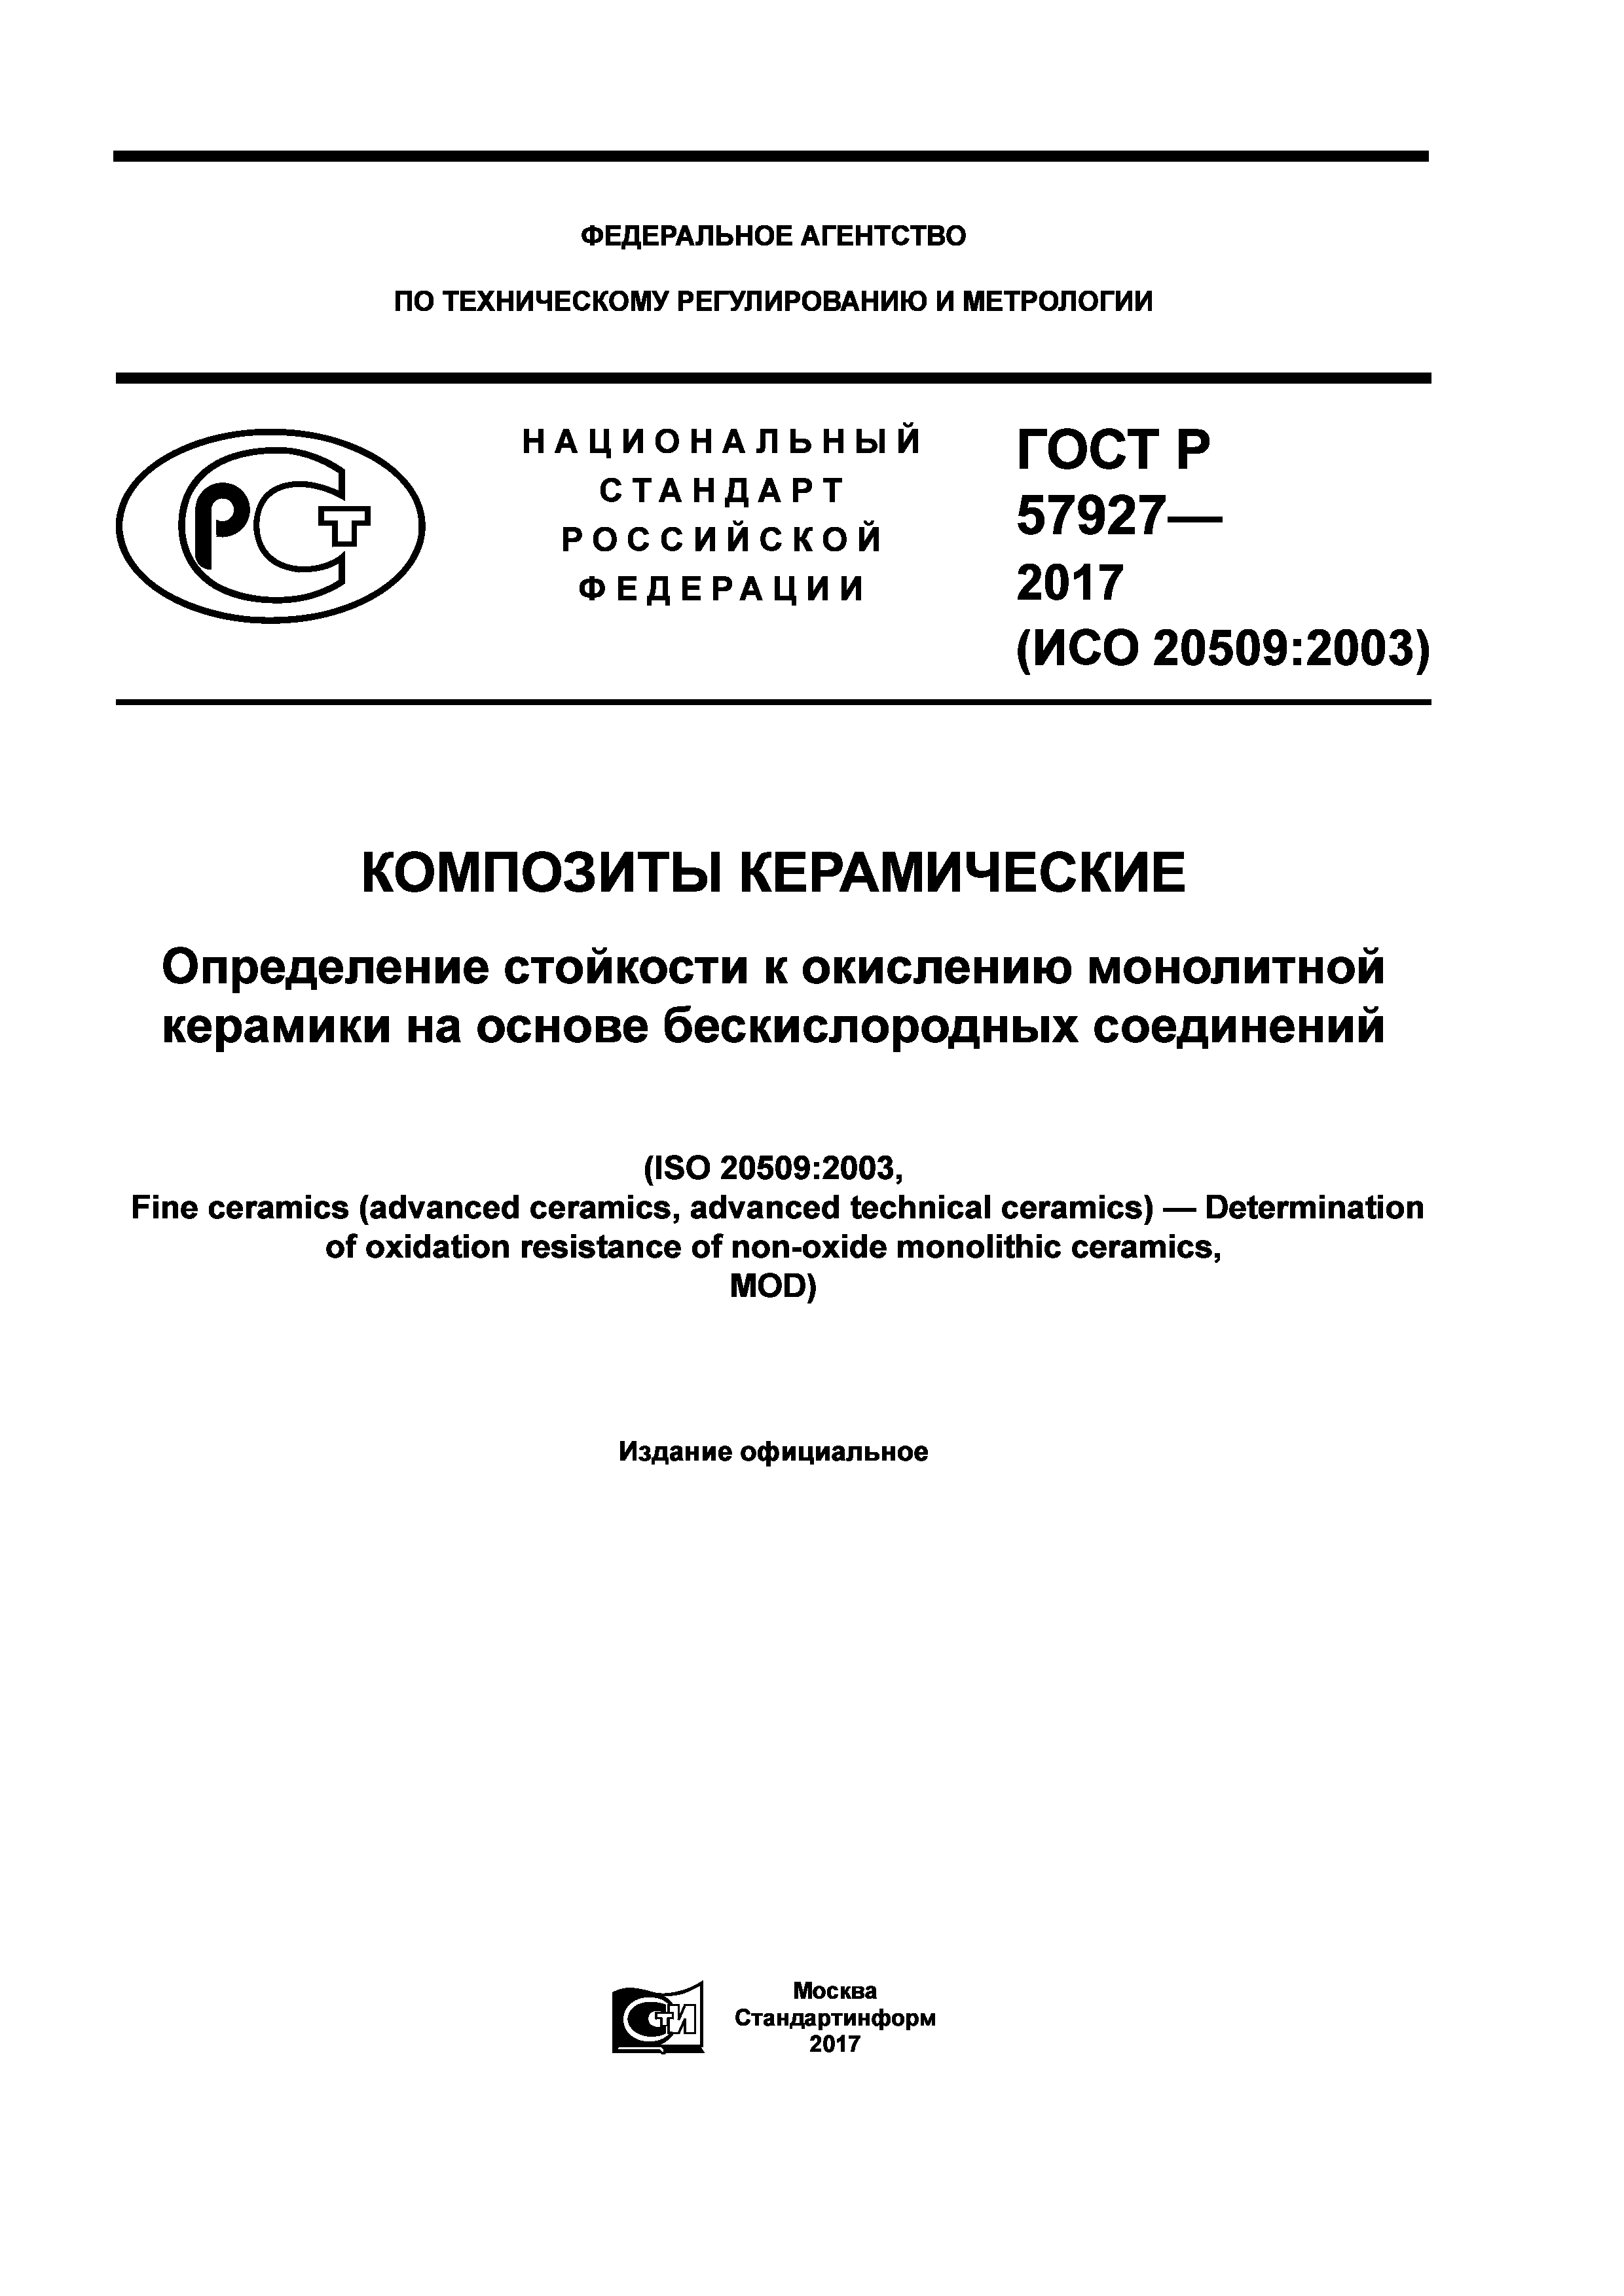 ГОСТ Р 57927-2017